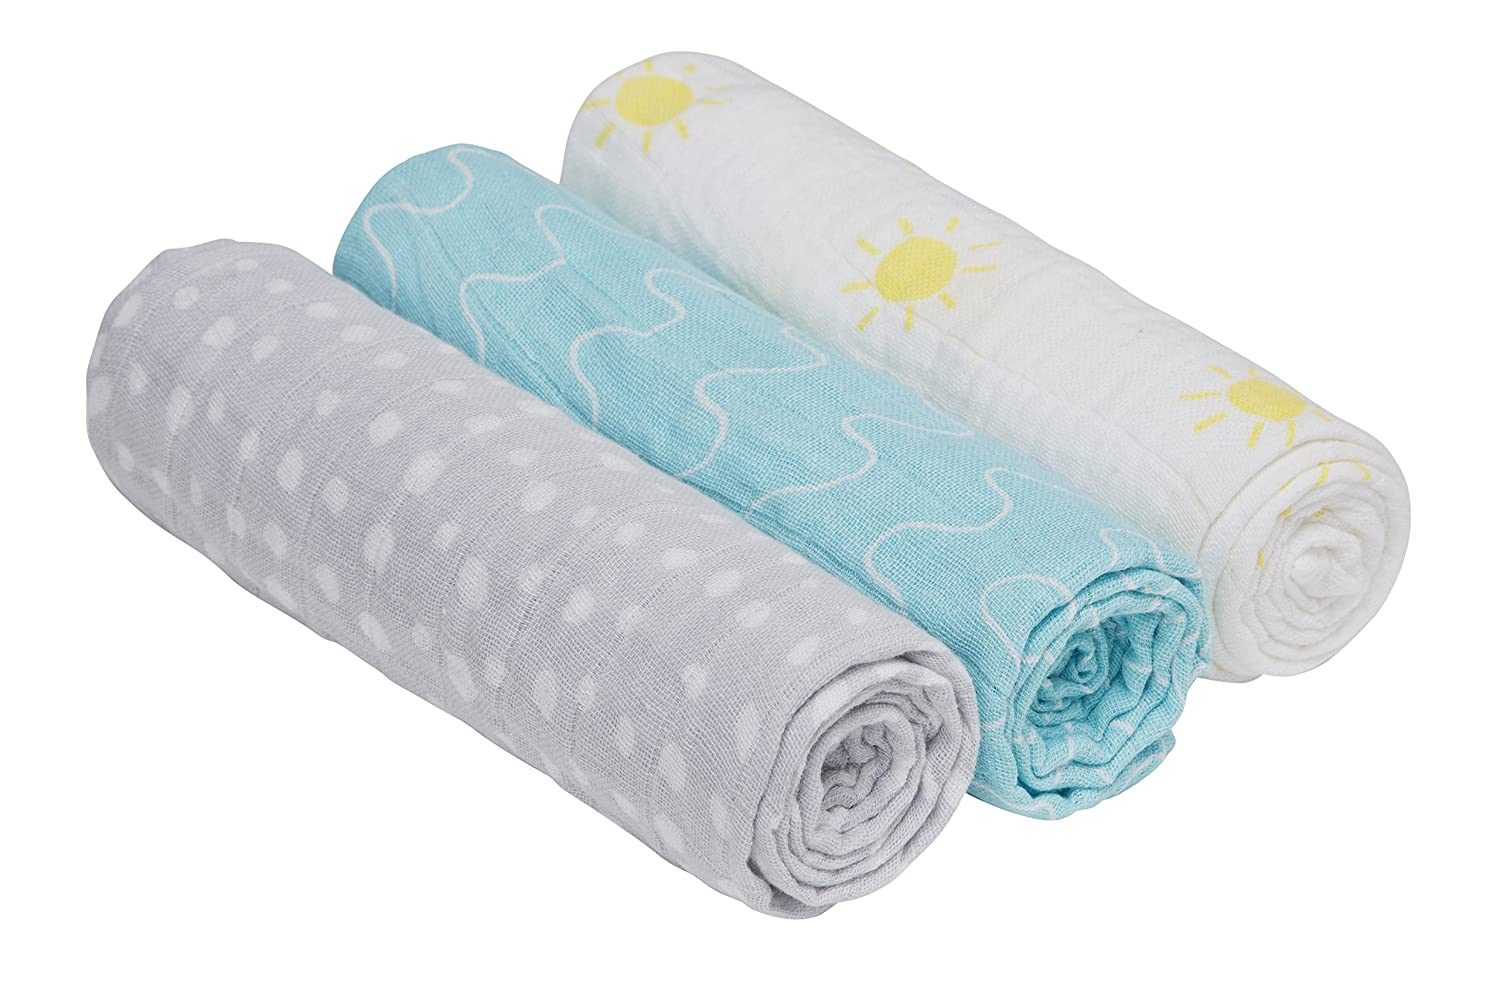 Lässig baby burp cloth, muslin nappies, cotton swaddle blanket, 85 x 85 cm, set of 3. Summer Dream boys. 85 x 85 cm Colourful